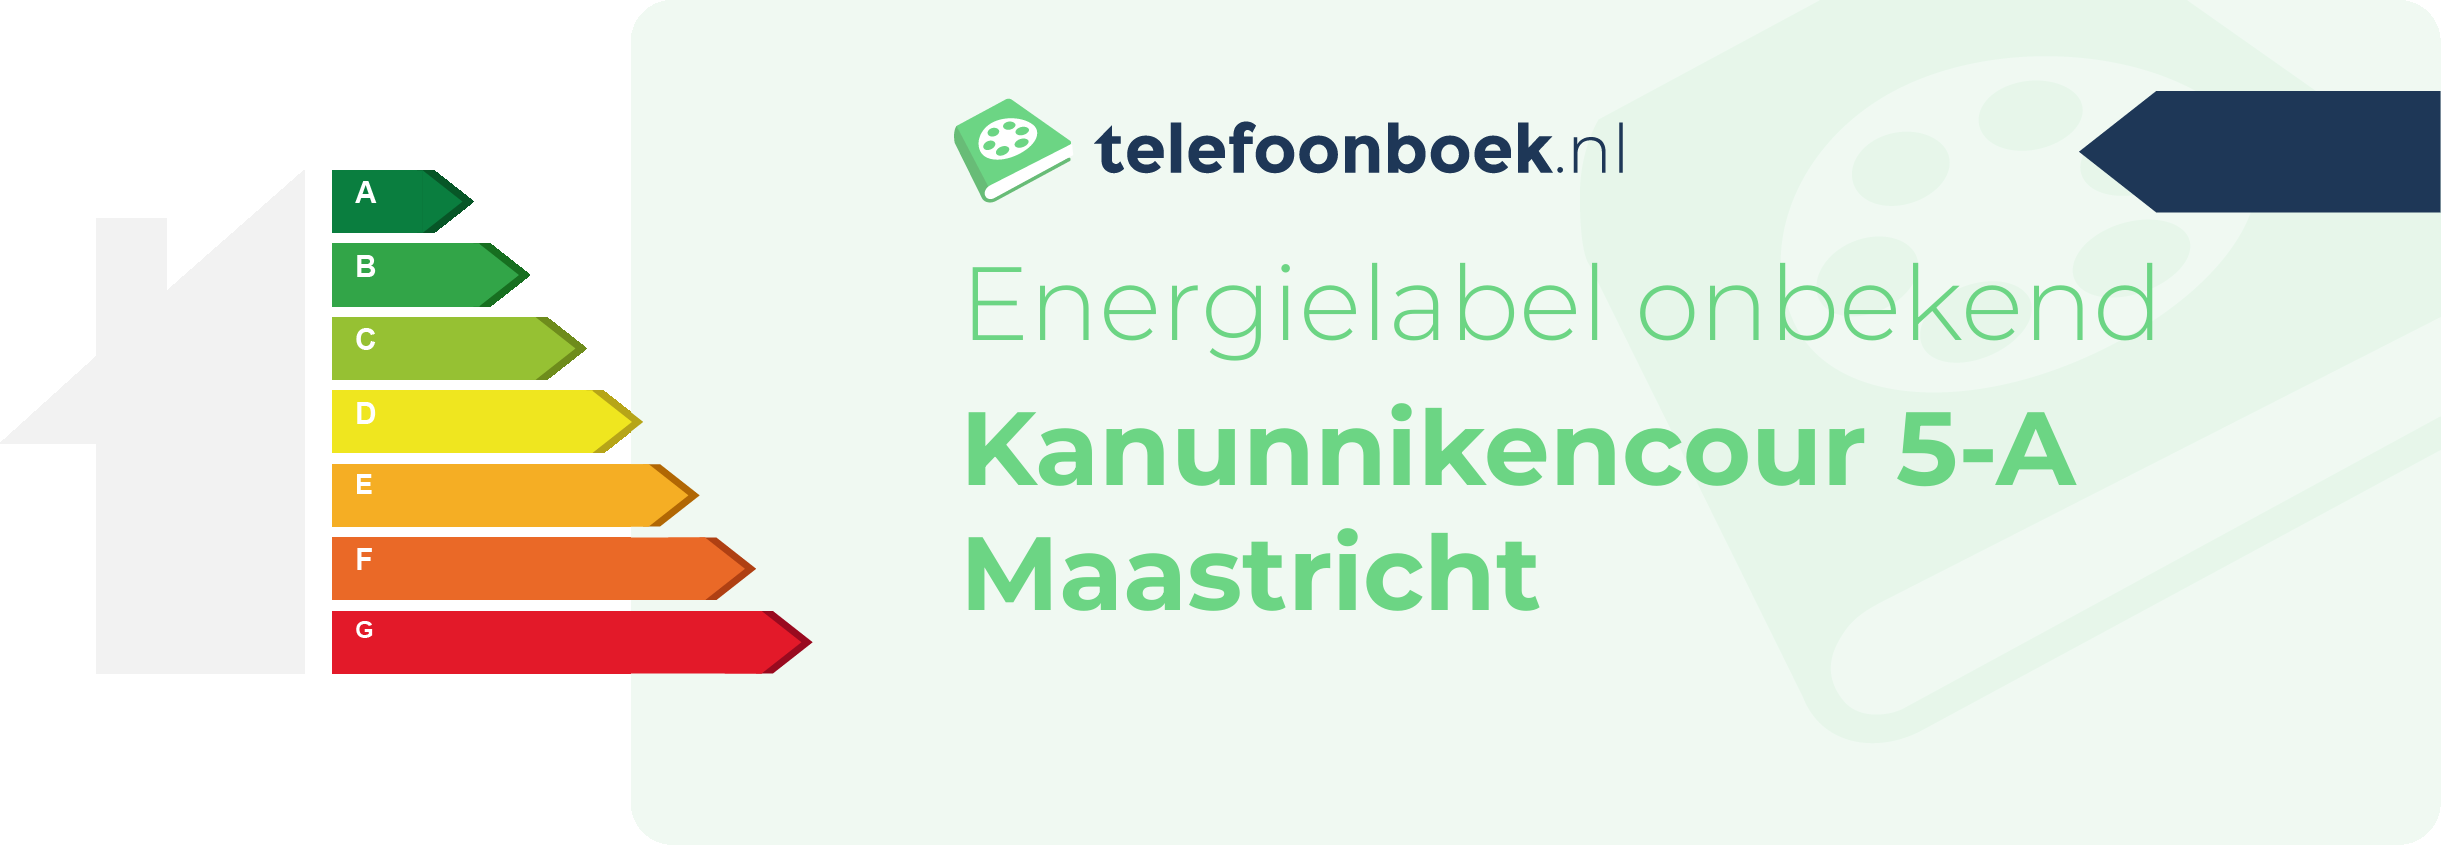 Energielabel Kanunnikencour 5-A Maastricht